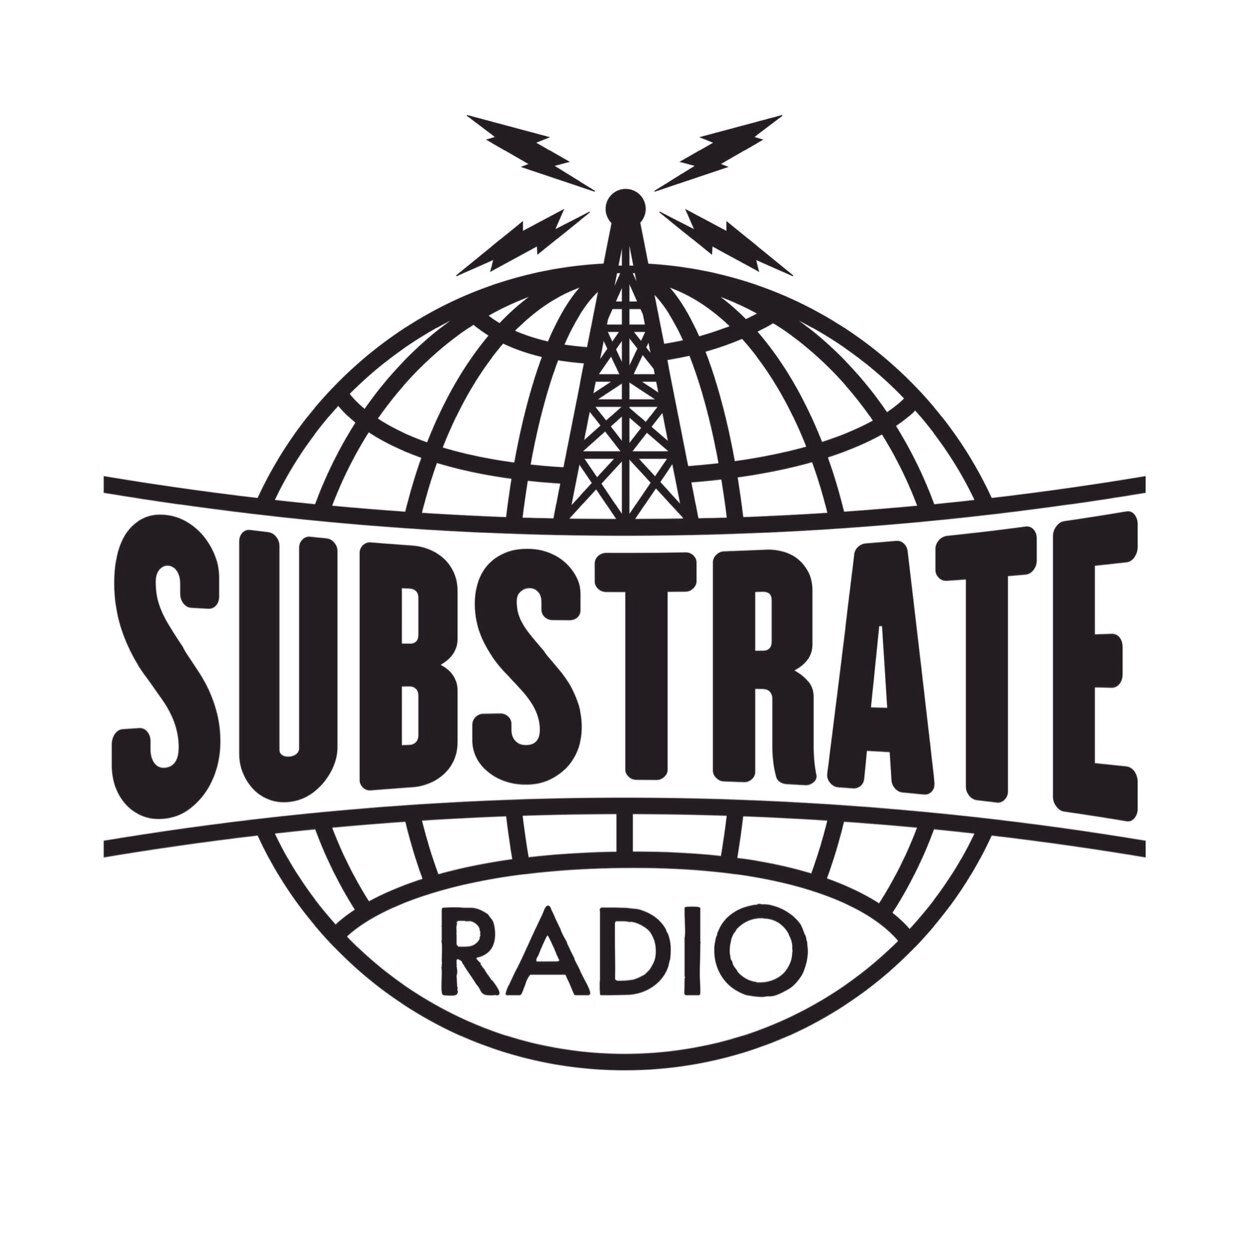 Freeform underground radio station based out of the Saturn Studios in Birmingham, Alabama. https://t.co/6enhTixhLn